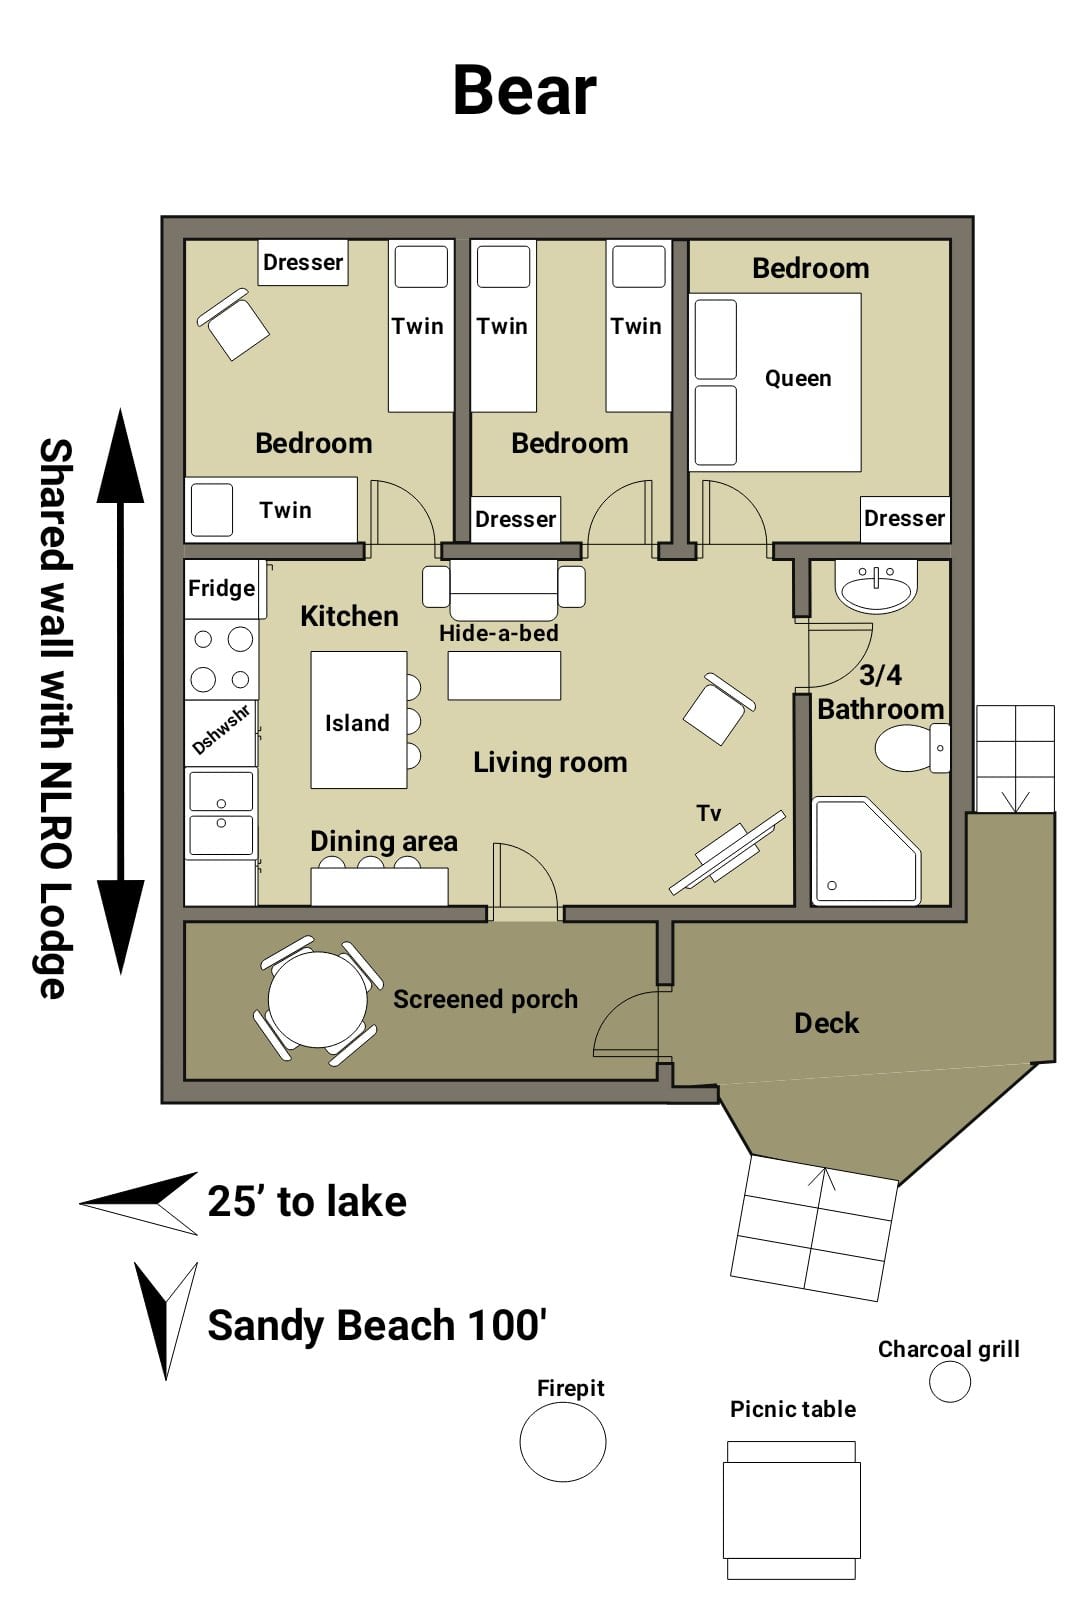 Bear Cabin floor plan